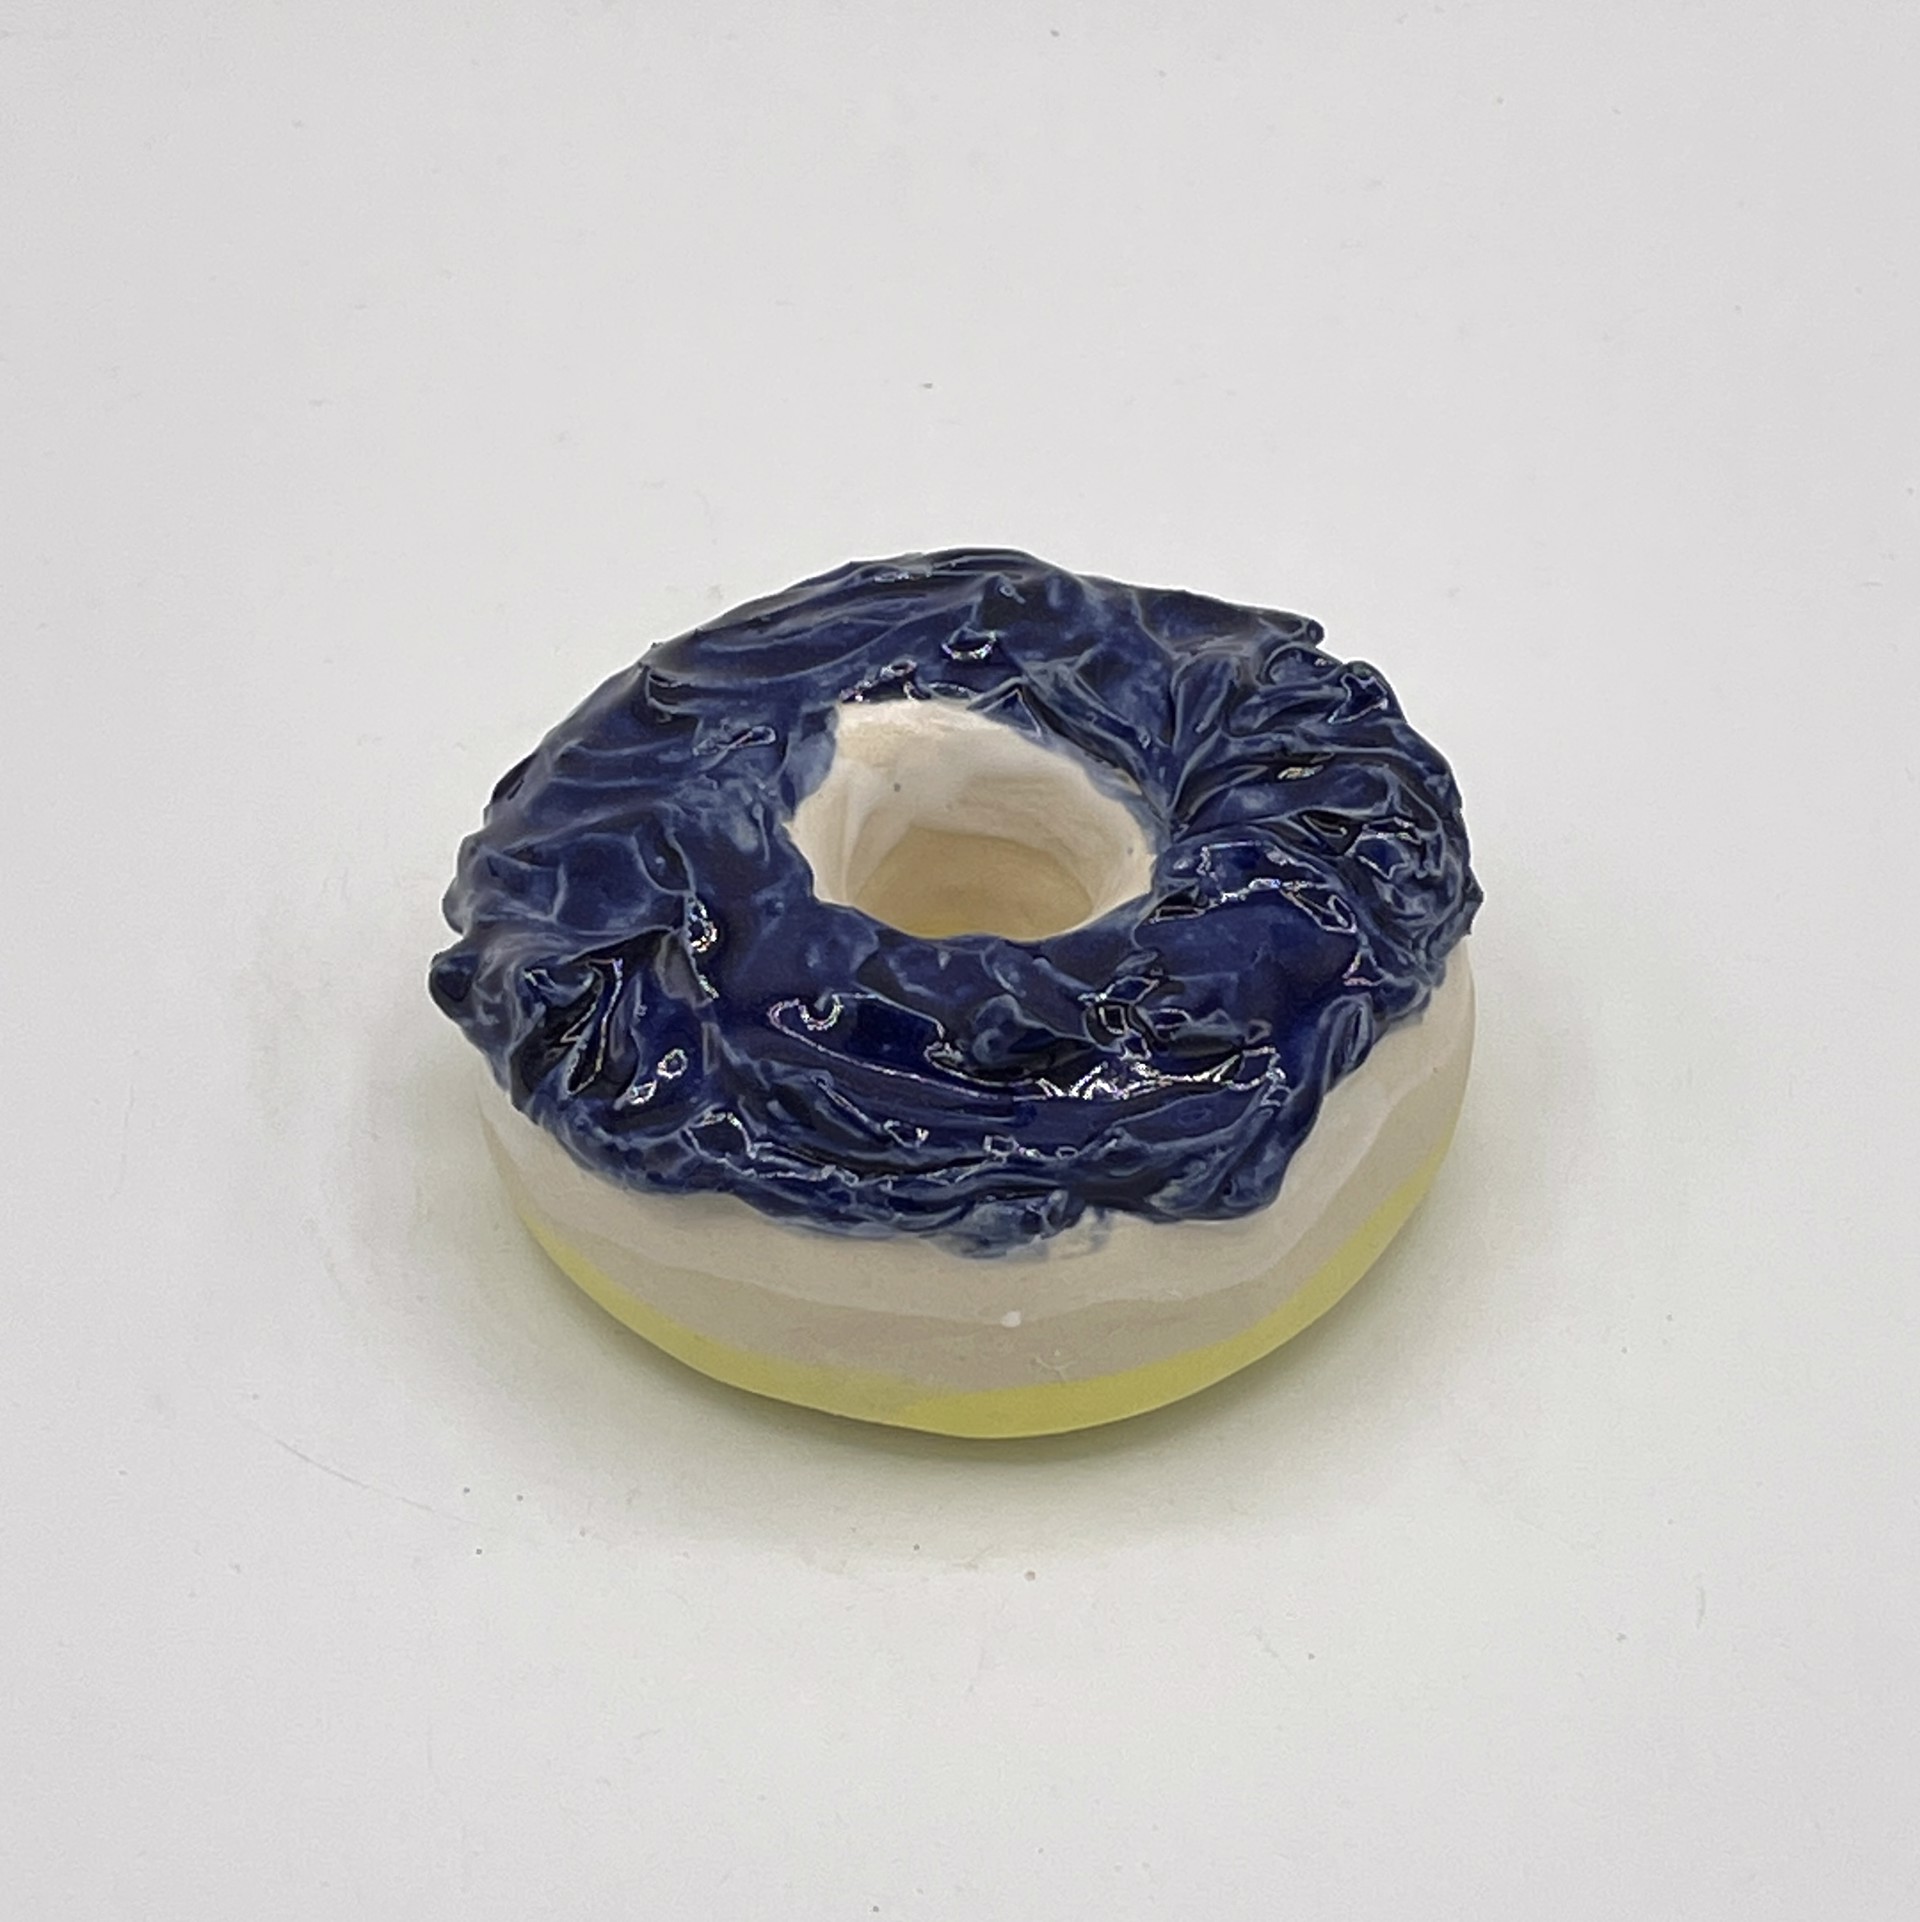 Lemon Donut with Blueberry Glaze by Liv Antonecchia